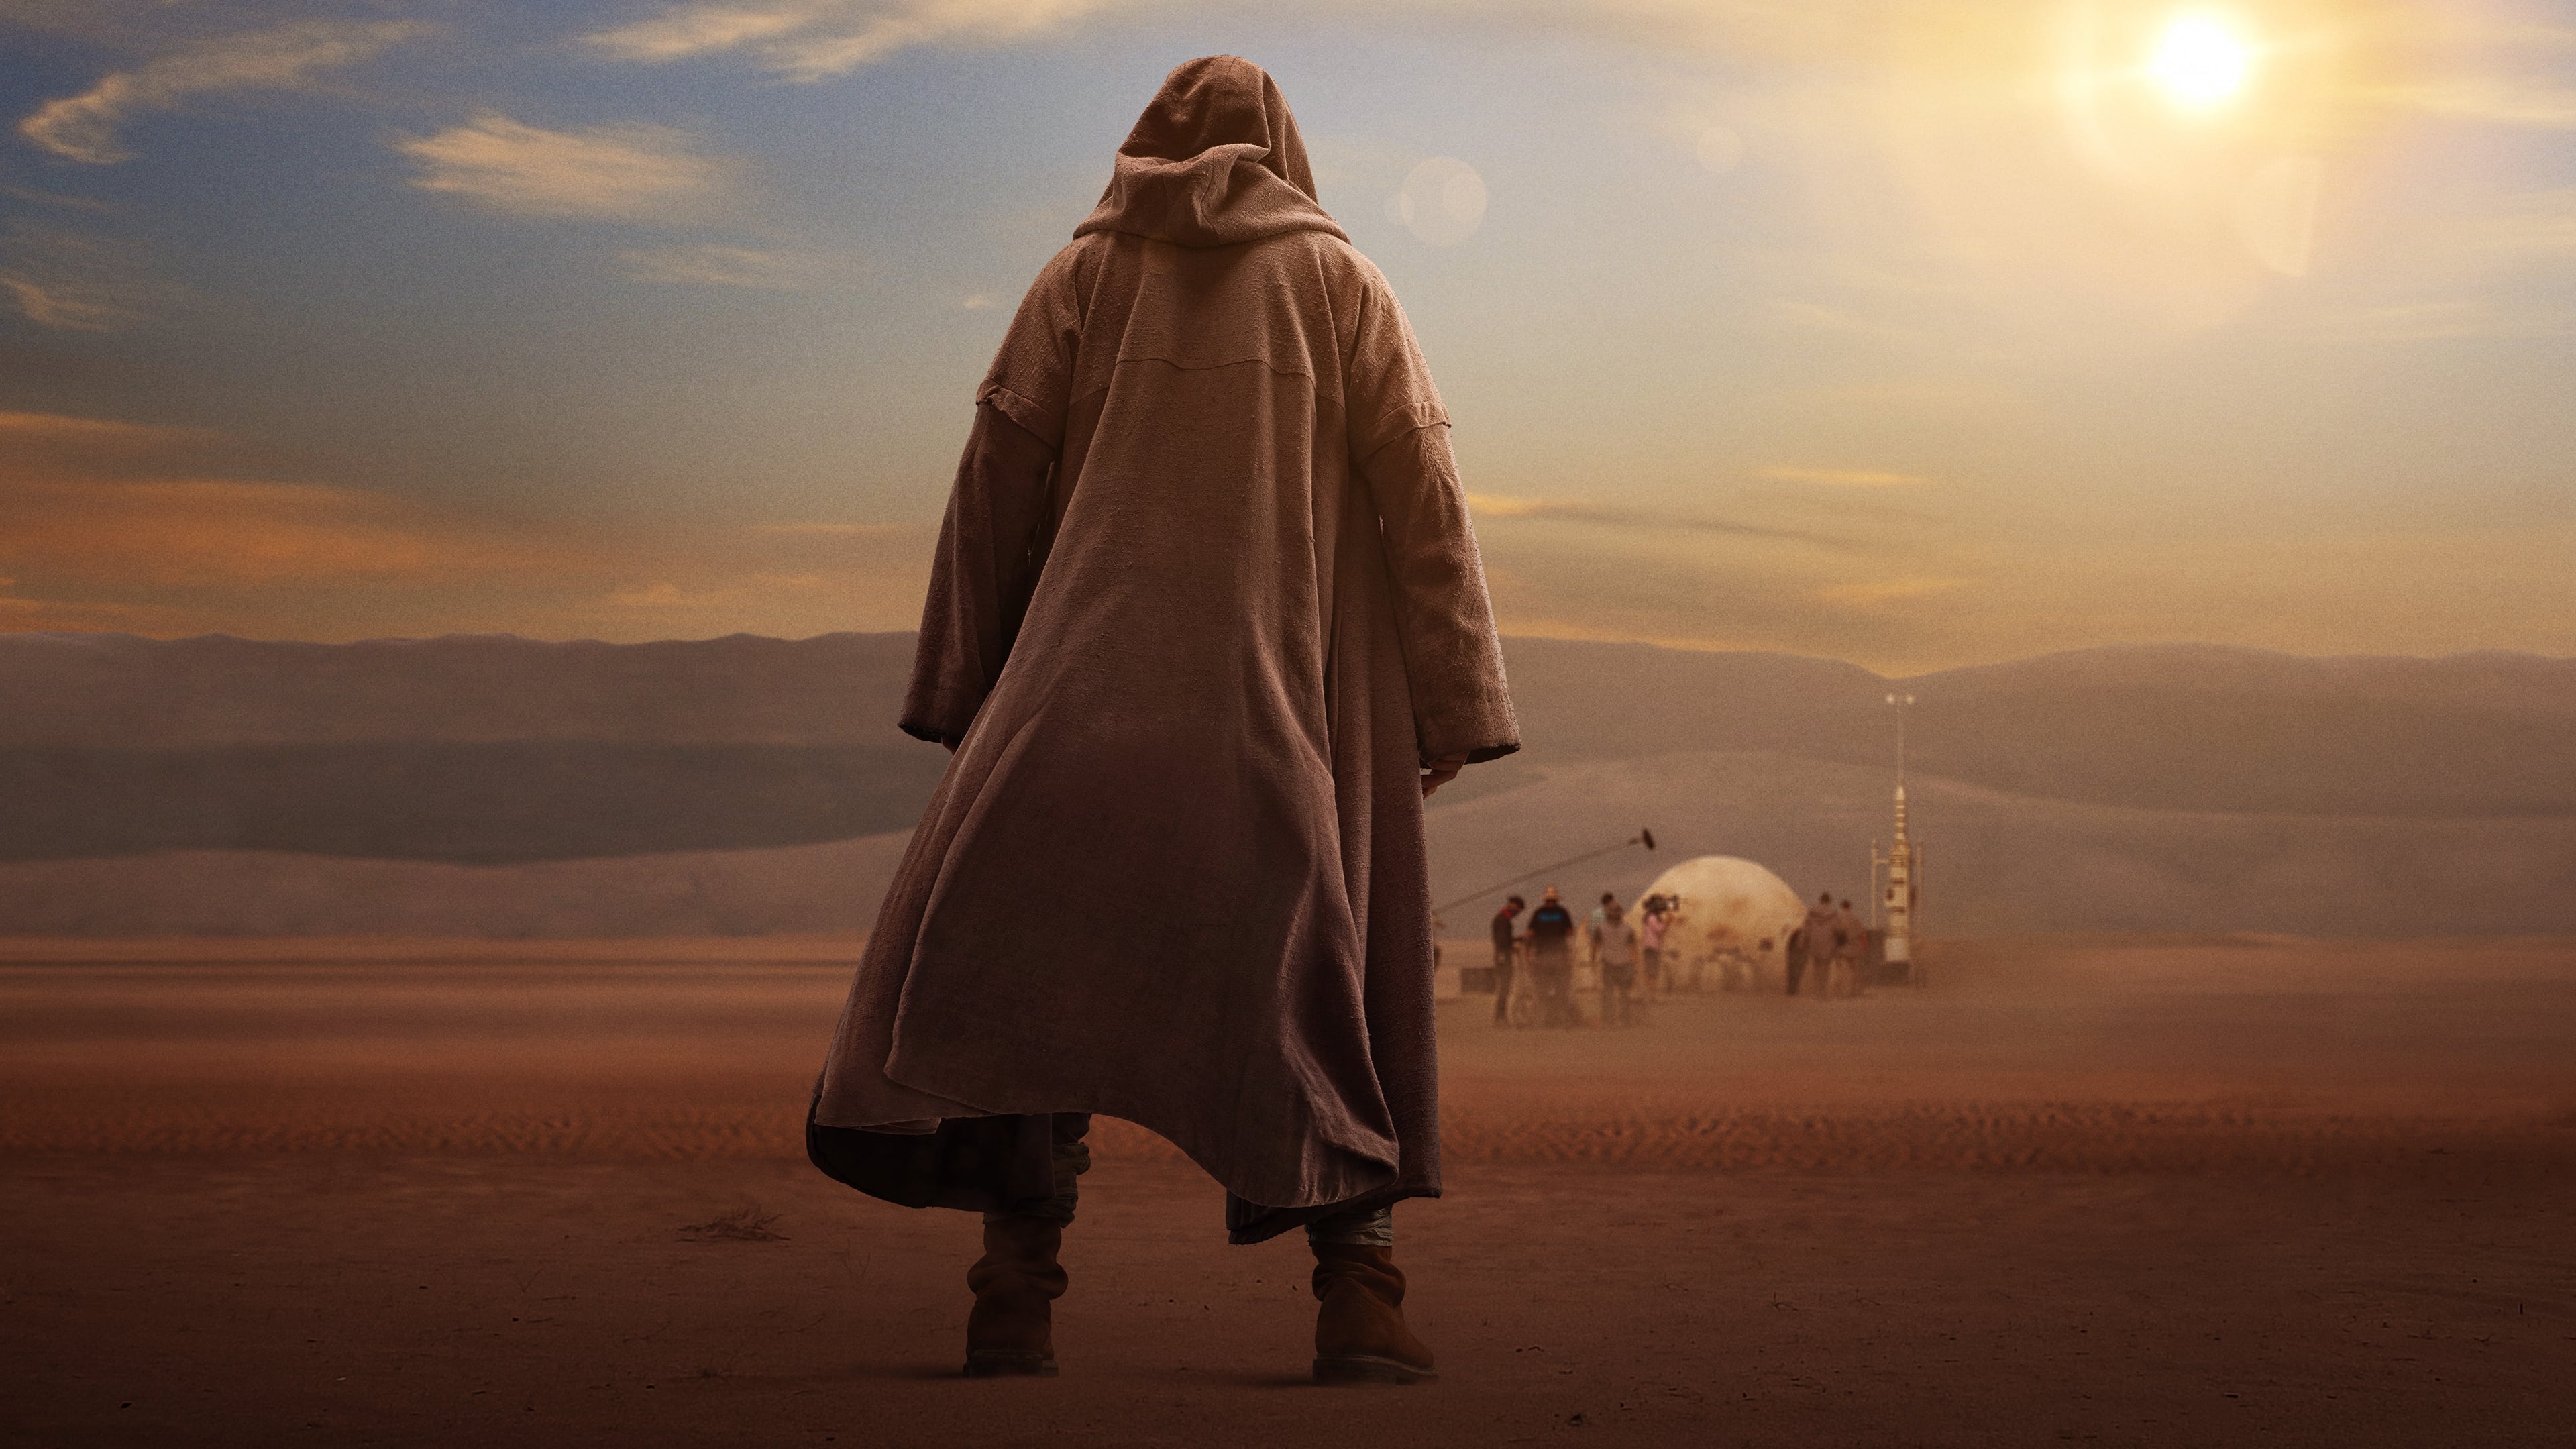 Obi-Wan Kenobi: A Jedi's Return (2022)